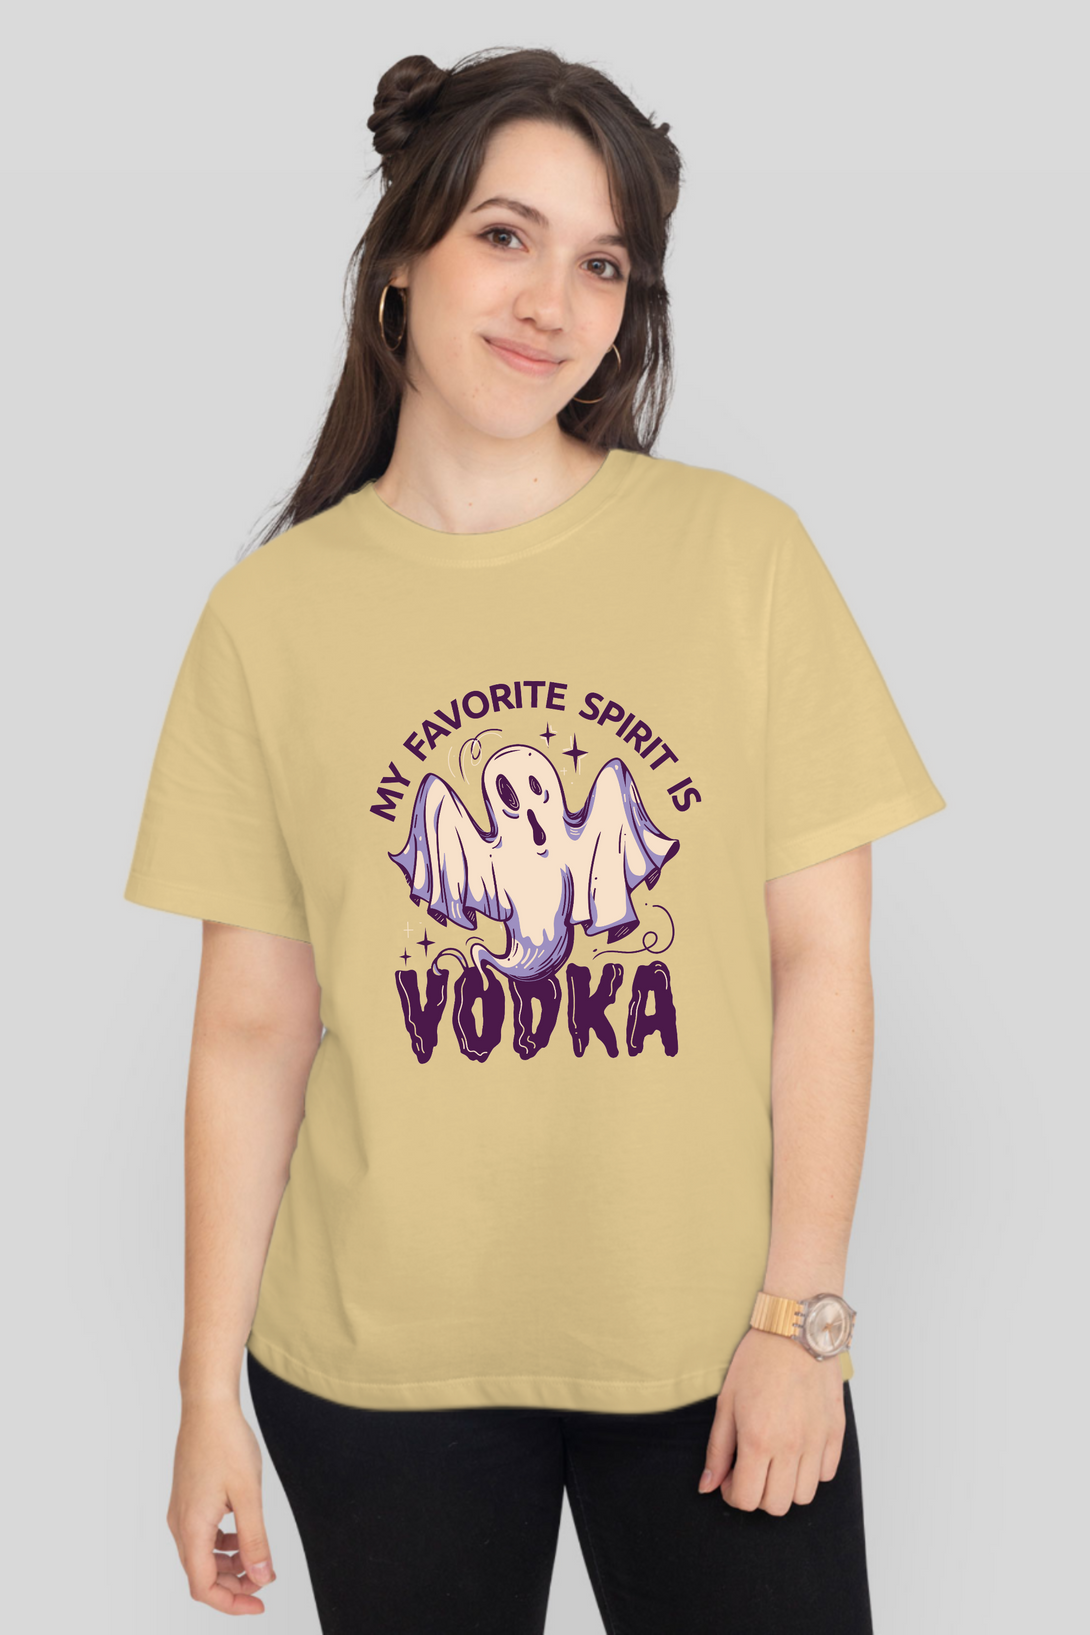 My Favourite Spirit Is Vodka Printed T-Shirt For Women - WowWaves - 12